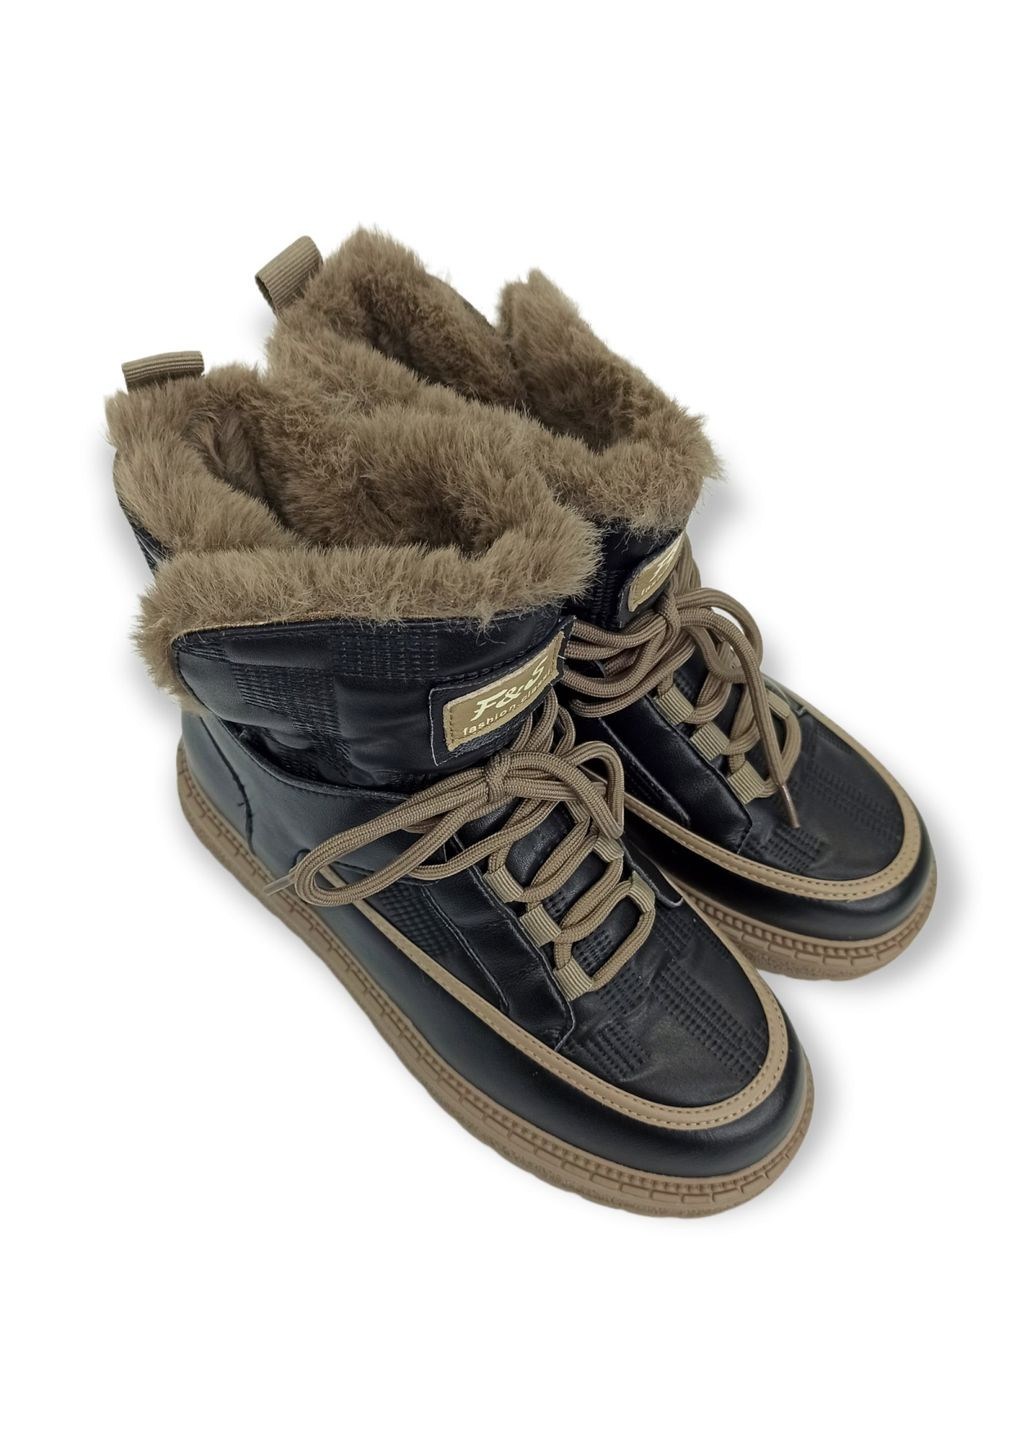 Зимние ботинки (р) кожа 0-1-1-zm-5978 Lifexpert